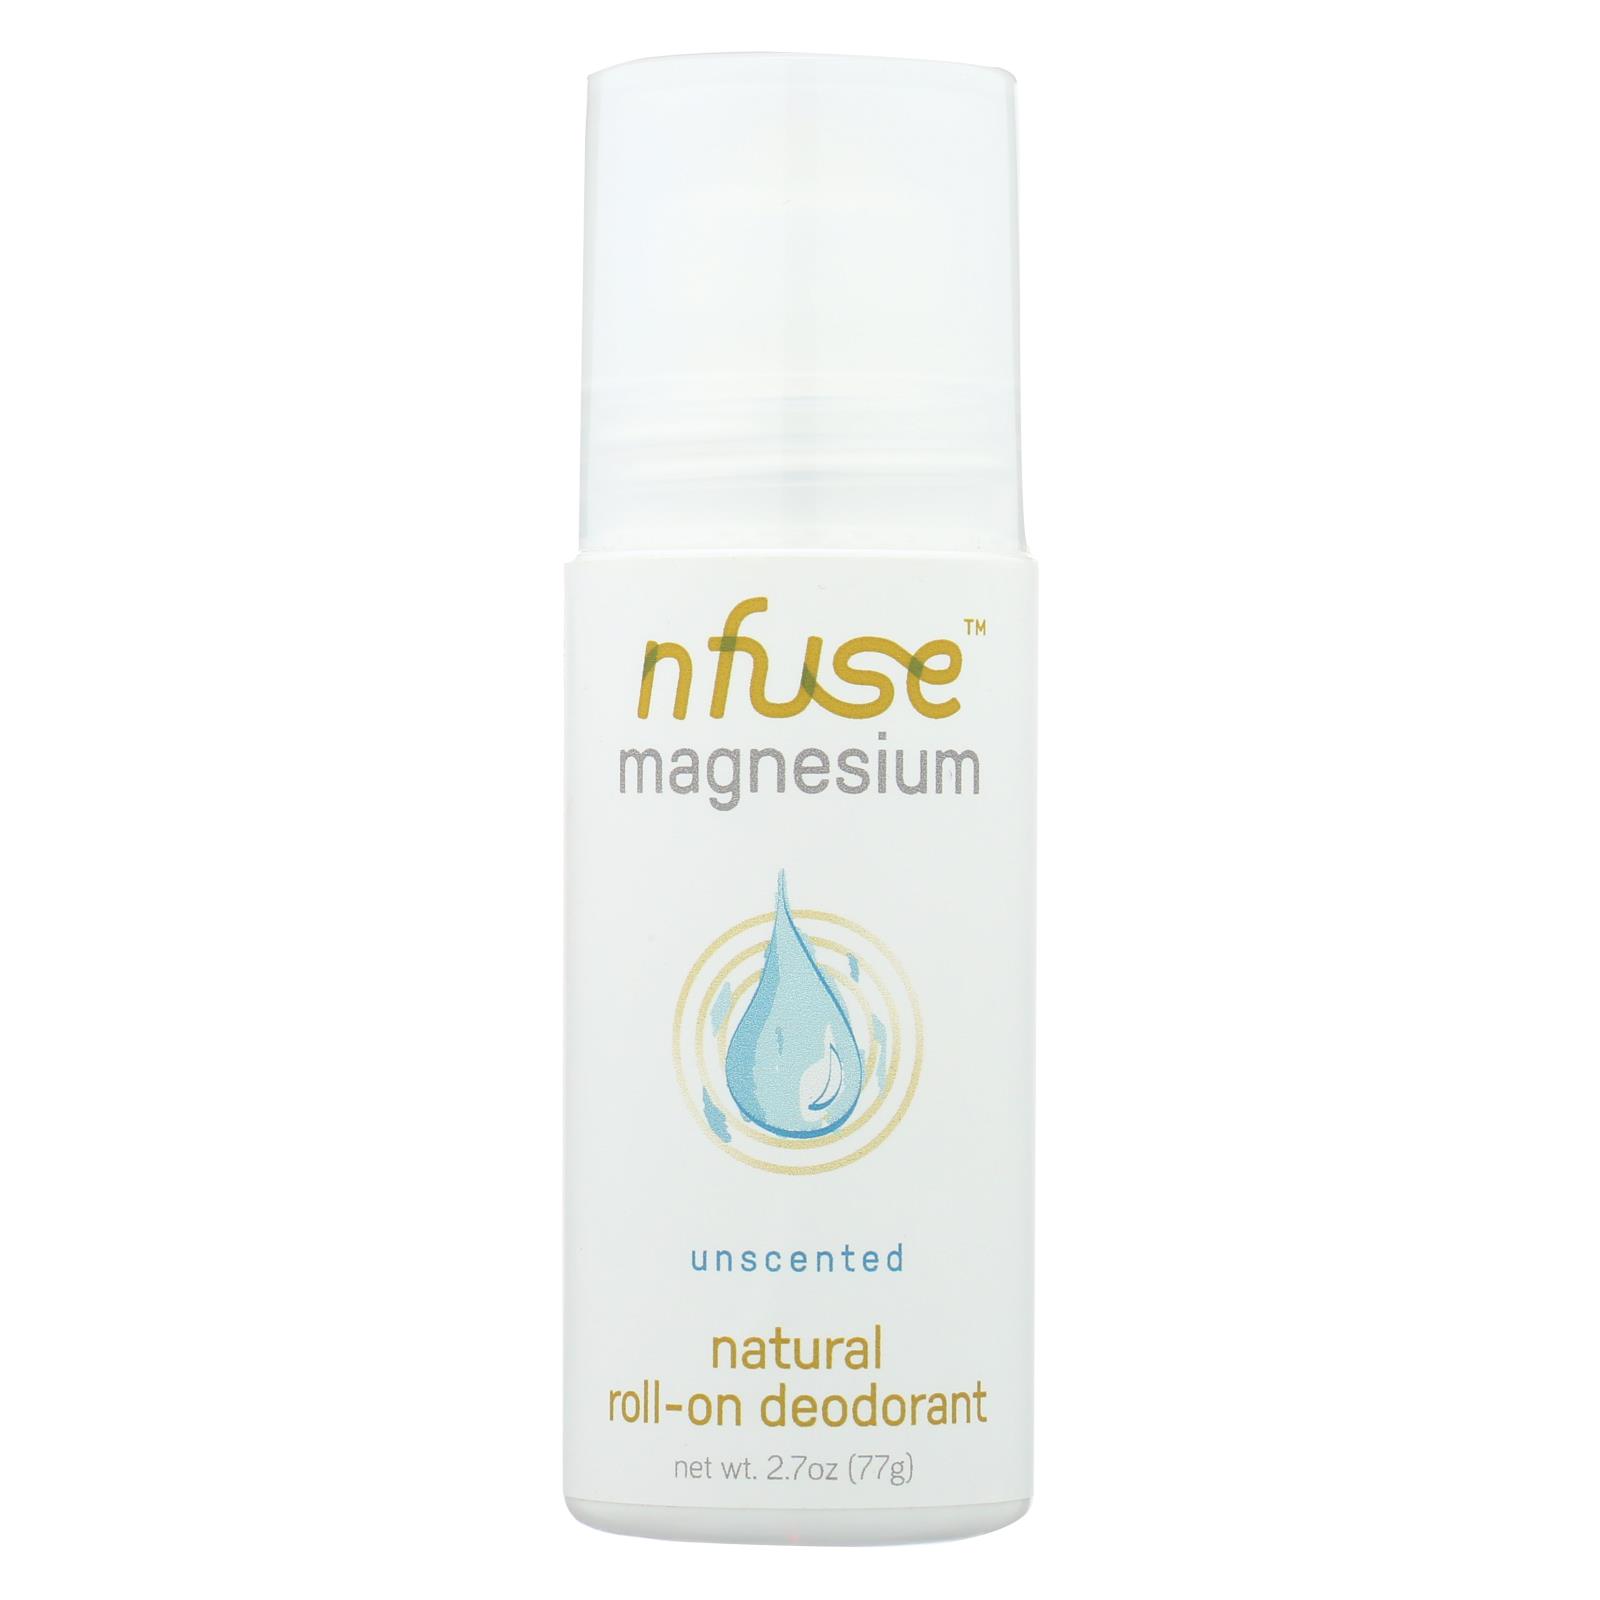 Nfuse - Deodorant Unscnt Natural Magnesium - 6개 묶음상품 - 2.7 OZ